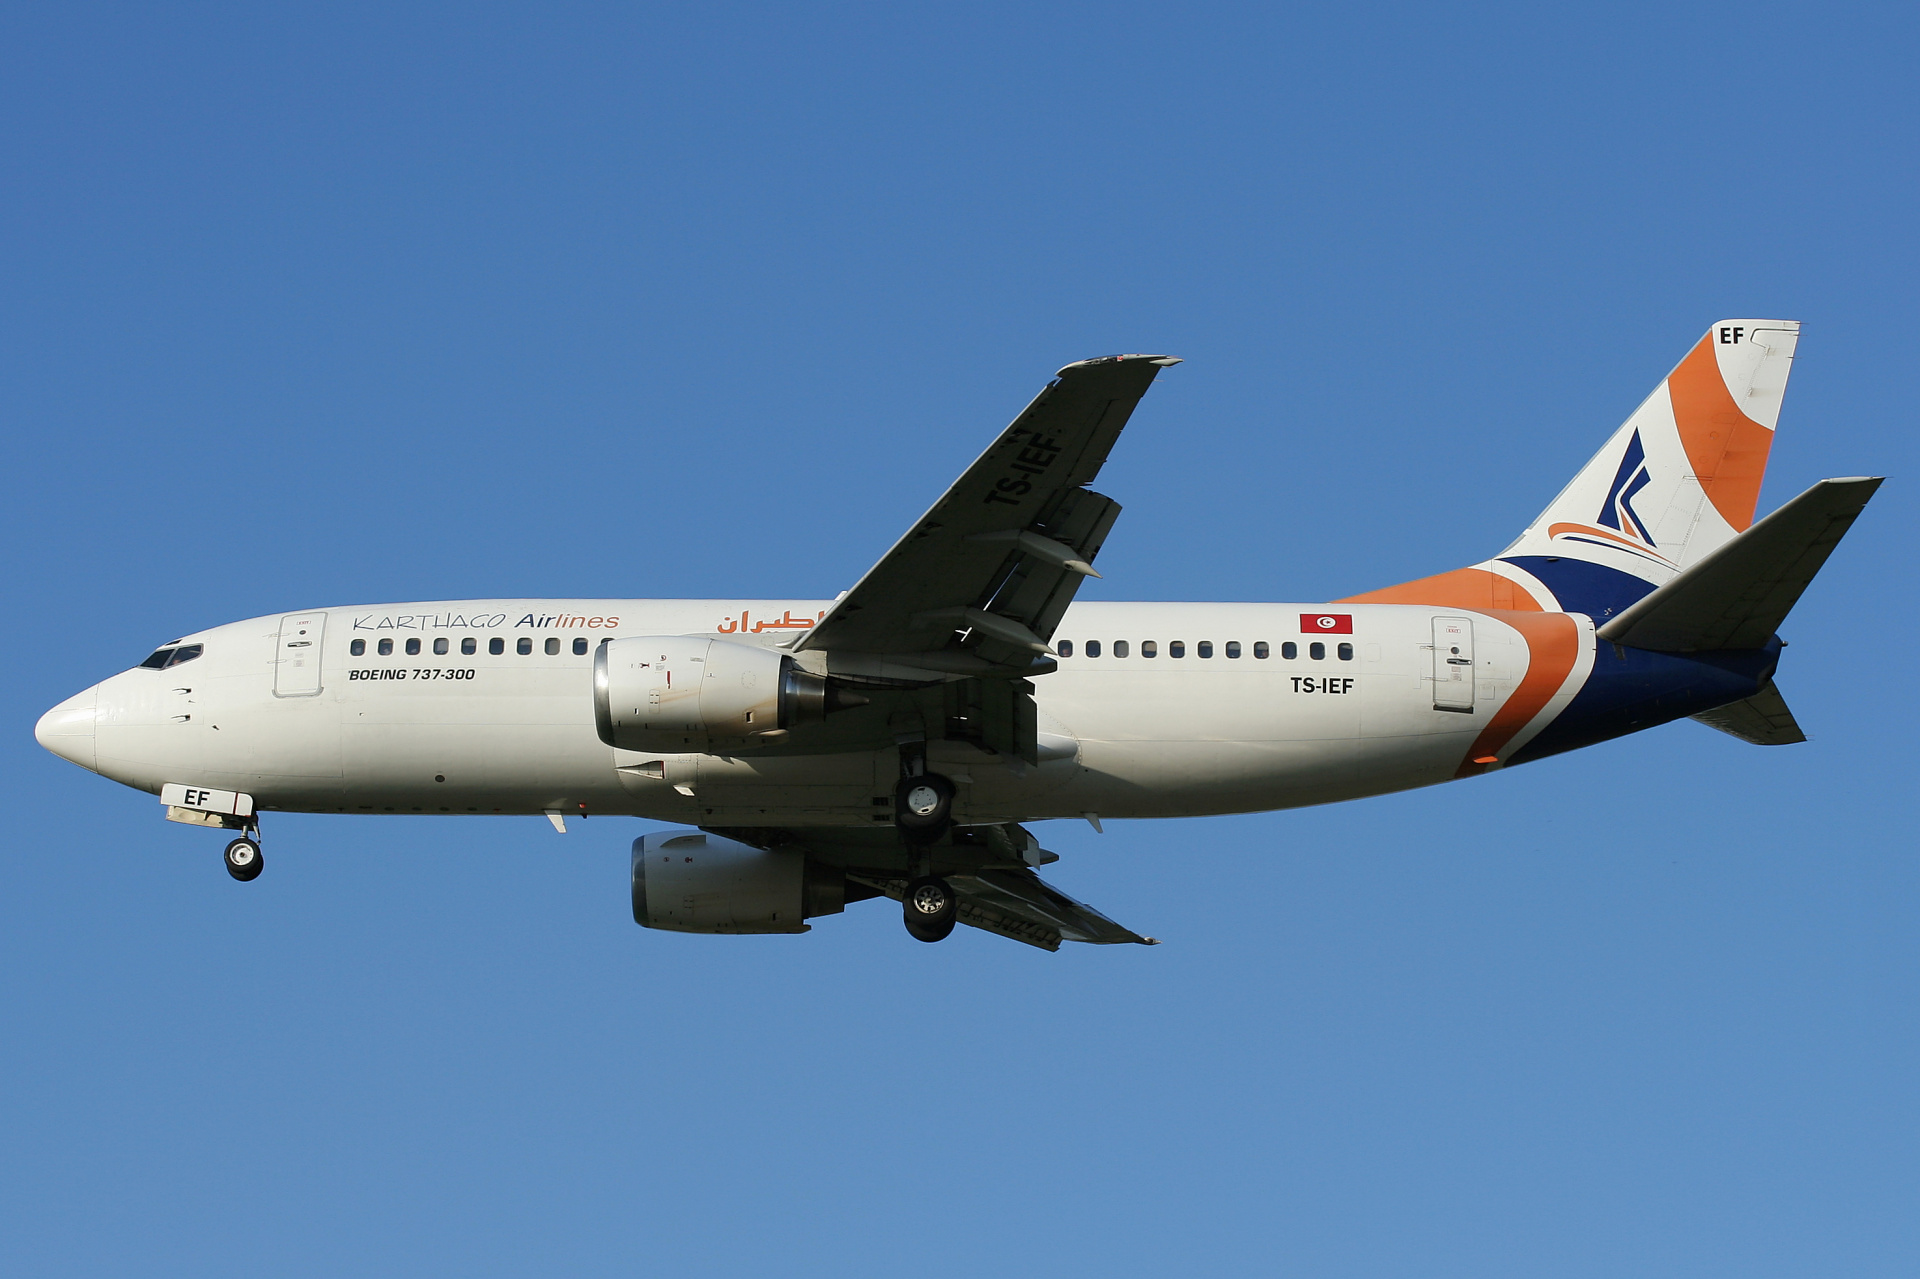 TS-IEF, Karthago Airlines (Aircraft » EPWA Spotting » Boeing 737-300)